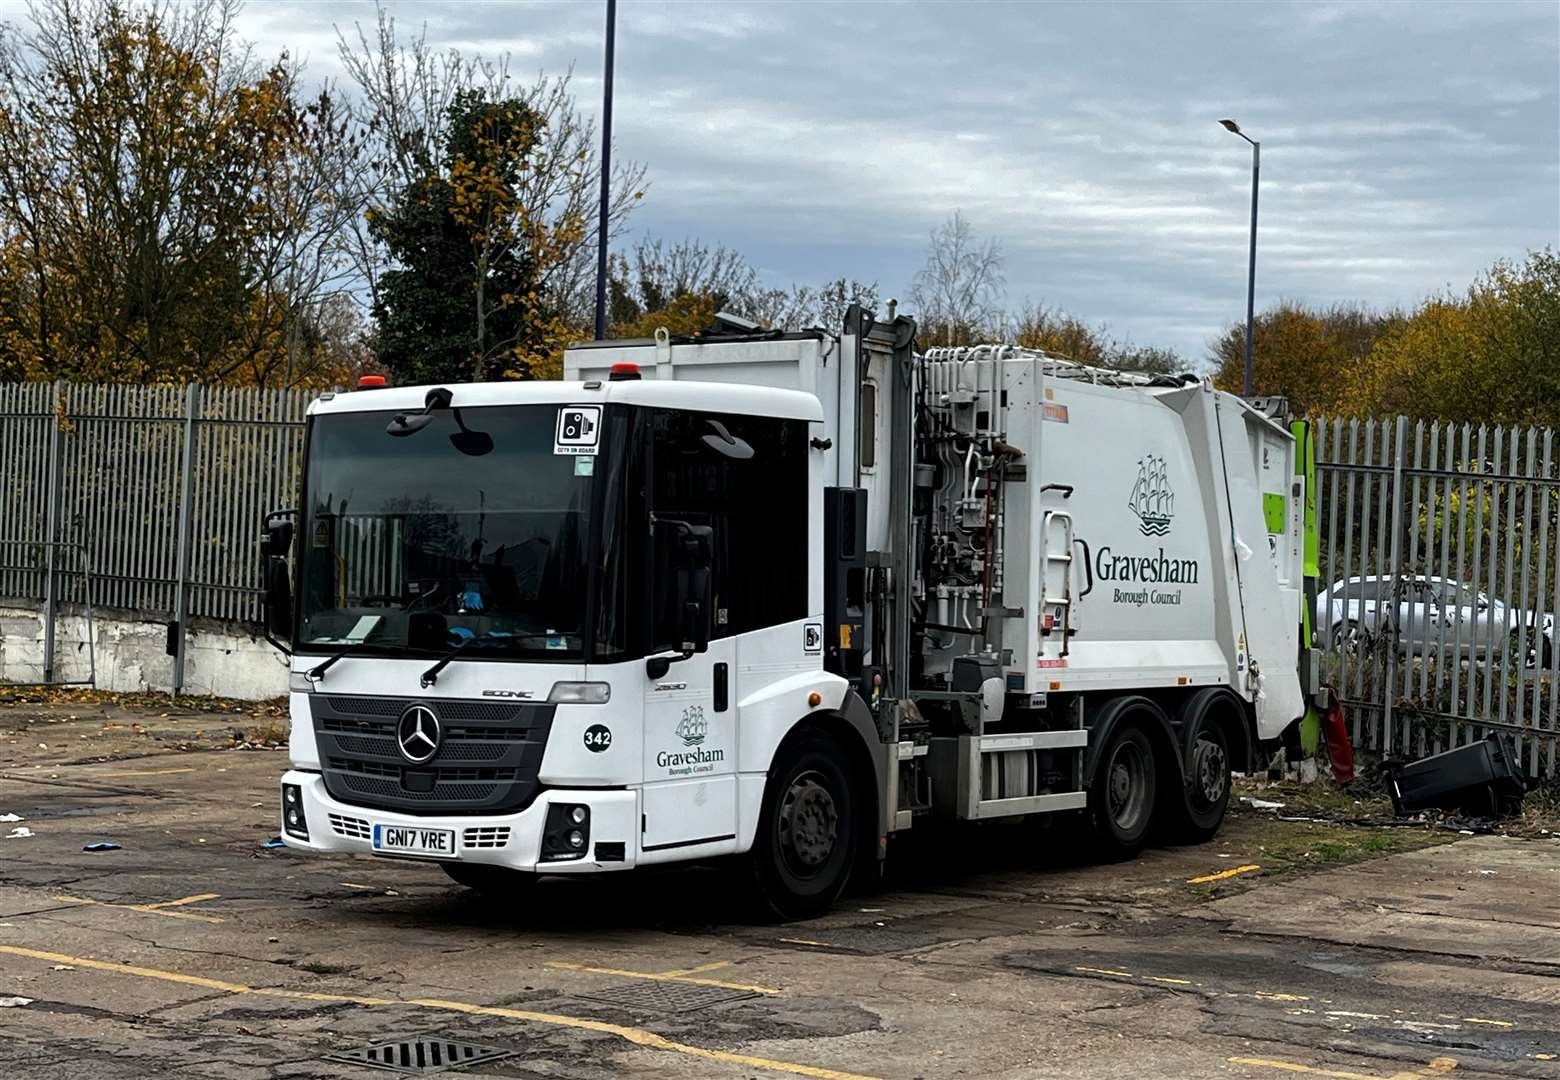 There are eight trucks and 40 binmen serving Gravesham borough's residents